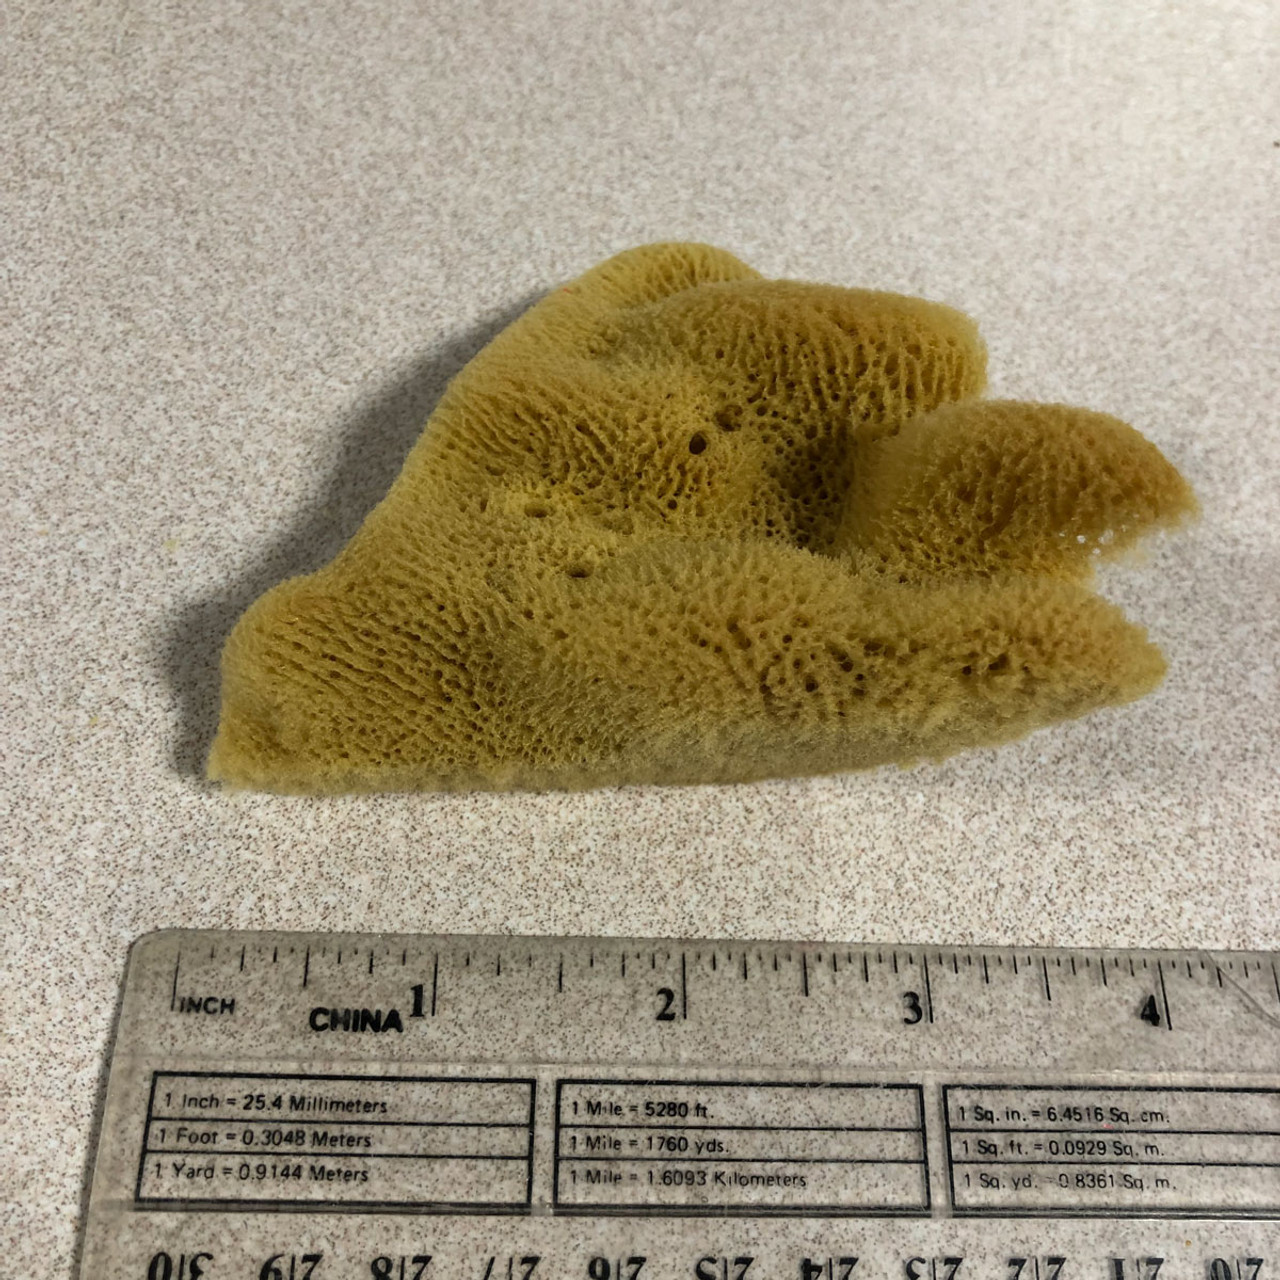 Sponge - Synthetic Large 6x4x2 - Stone Leaf Pottery